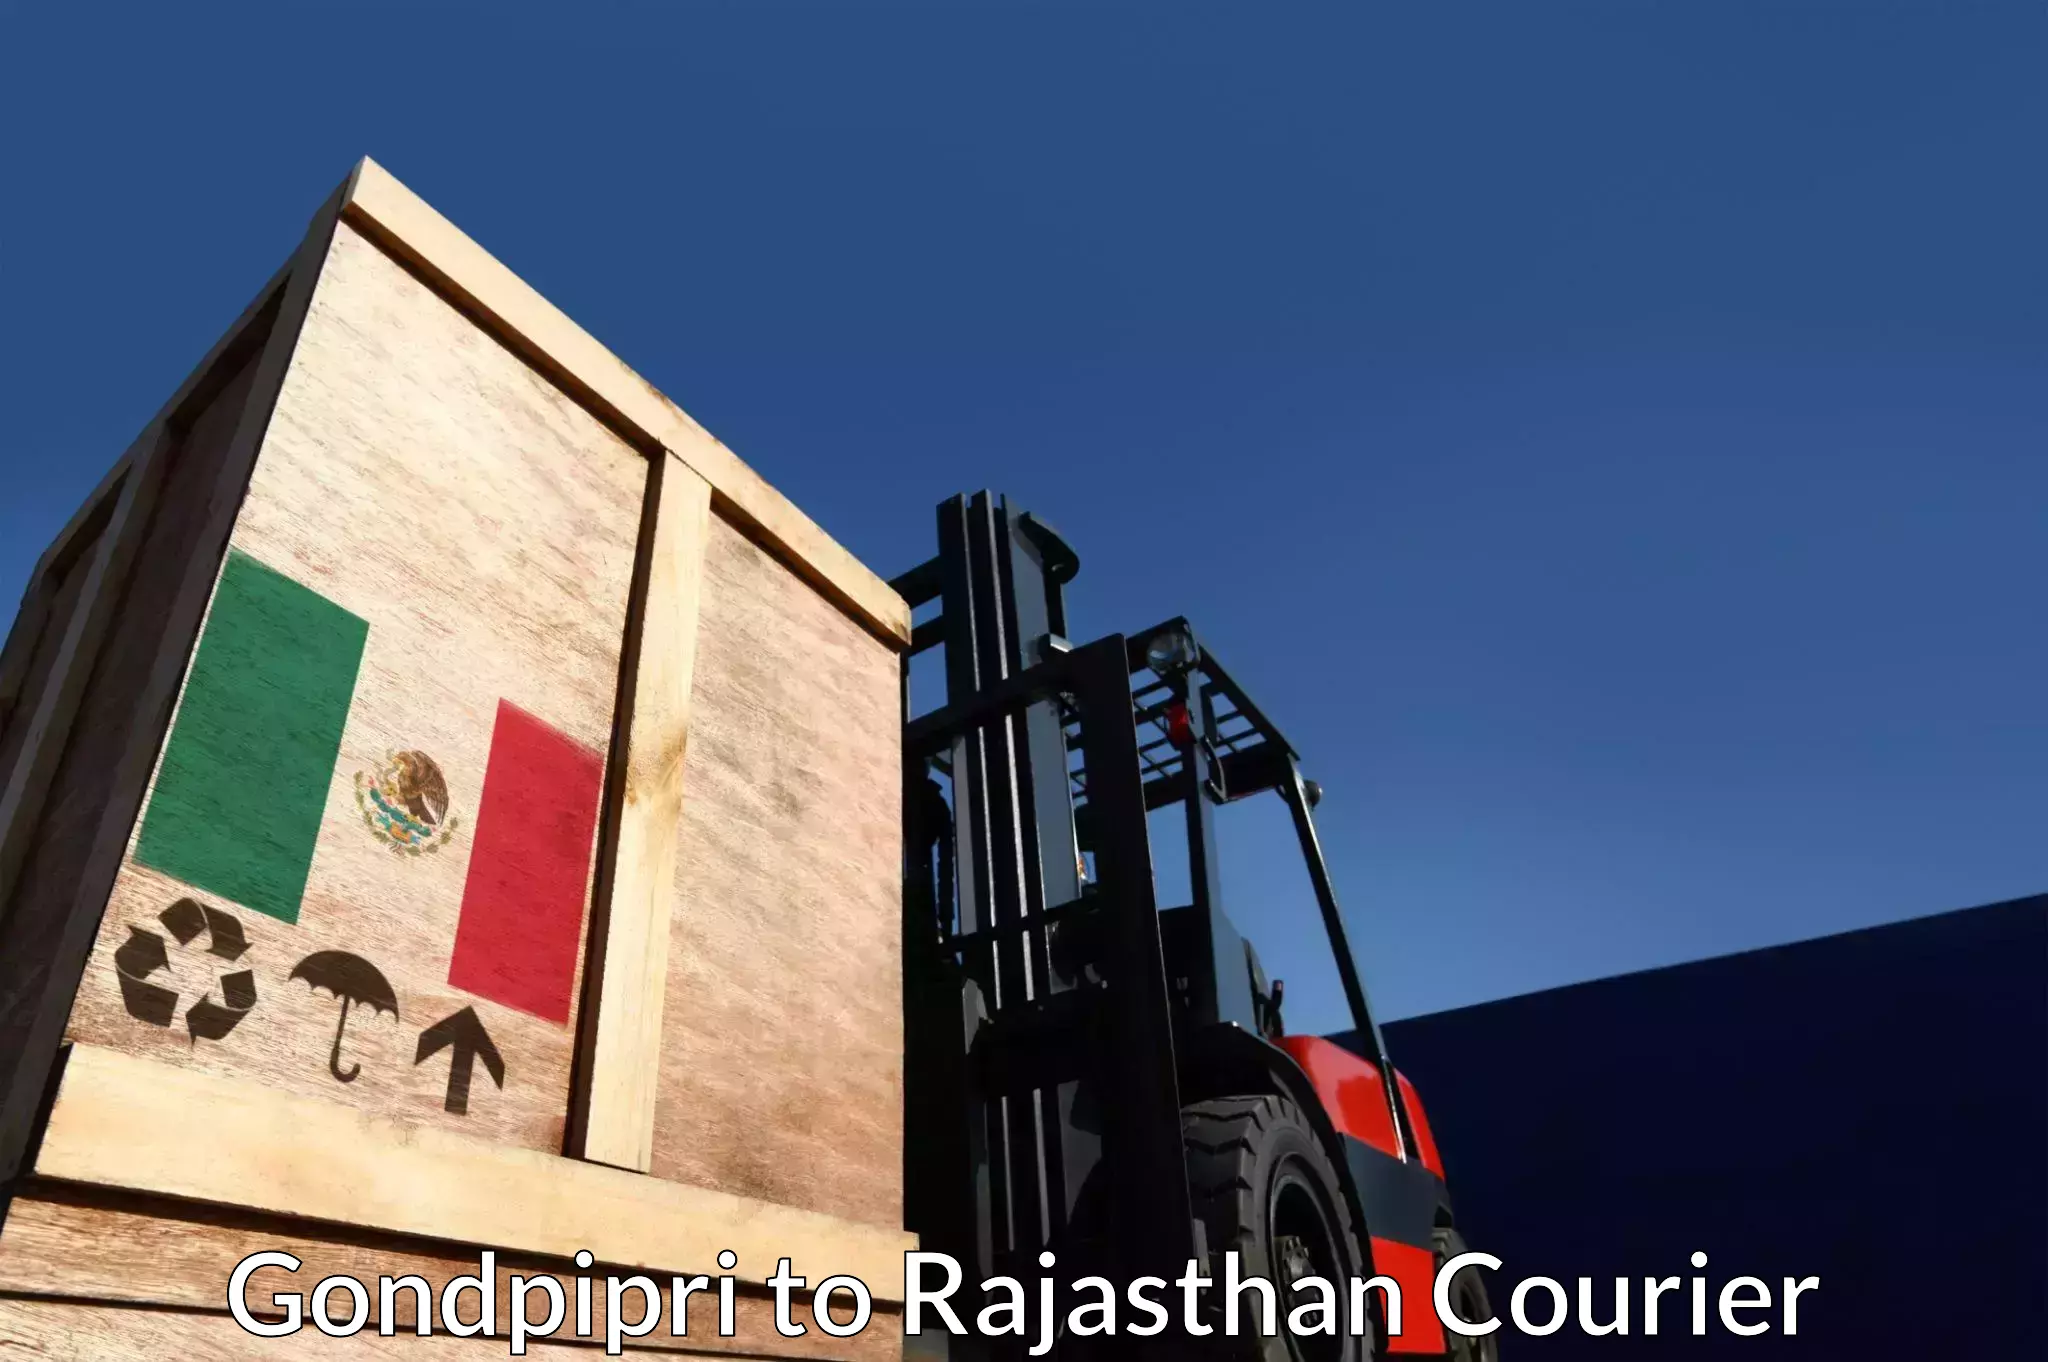 Courier service comparison Gondpipri to Rajasthan